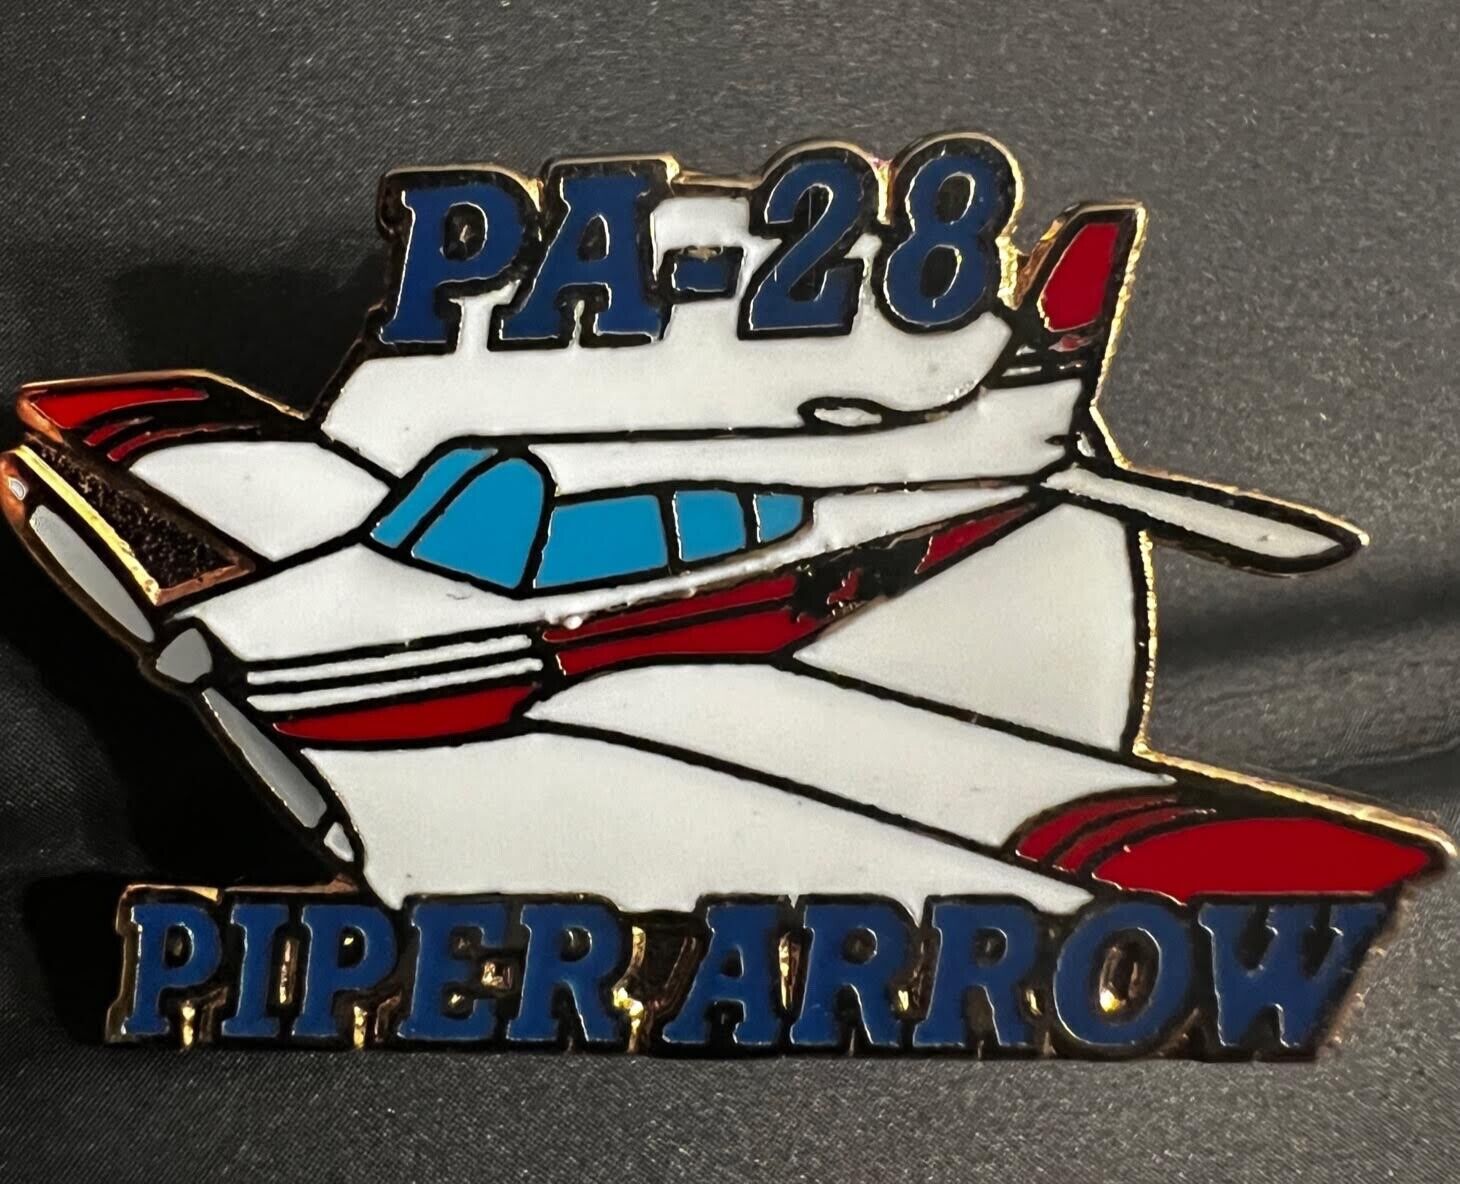 PIPER ARROW PA-28 LIGHT AIRCRAFT LAPEL PIN BADGE 1.3 INCHES NEW CUB PLANE